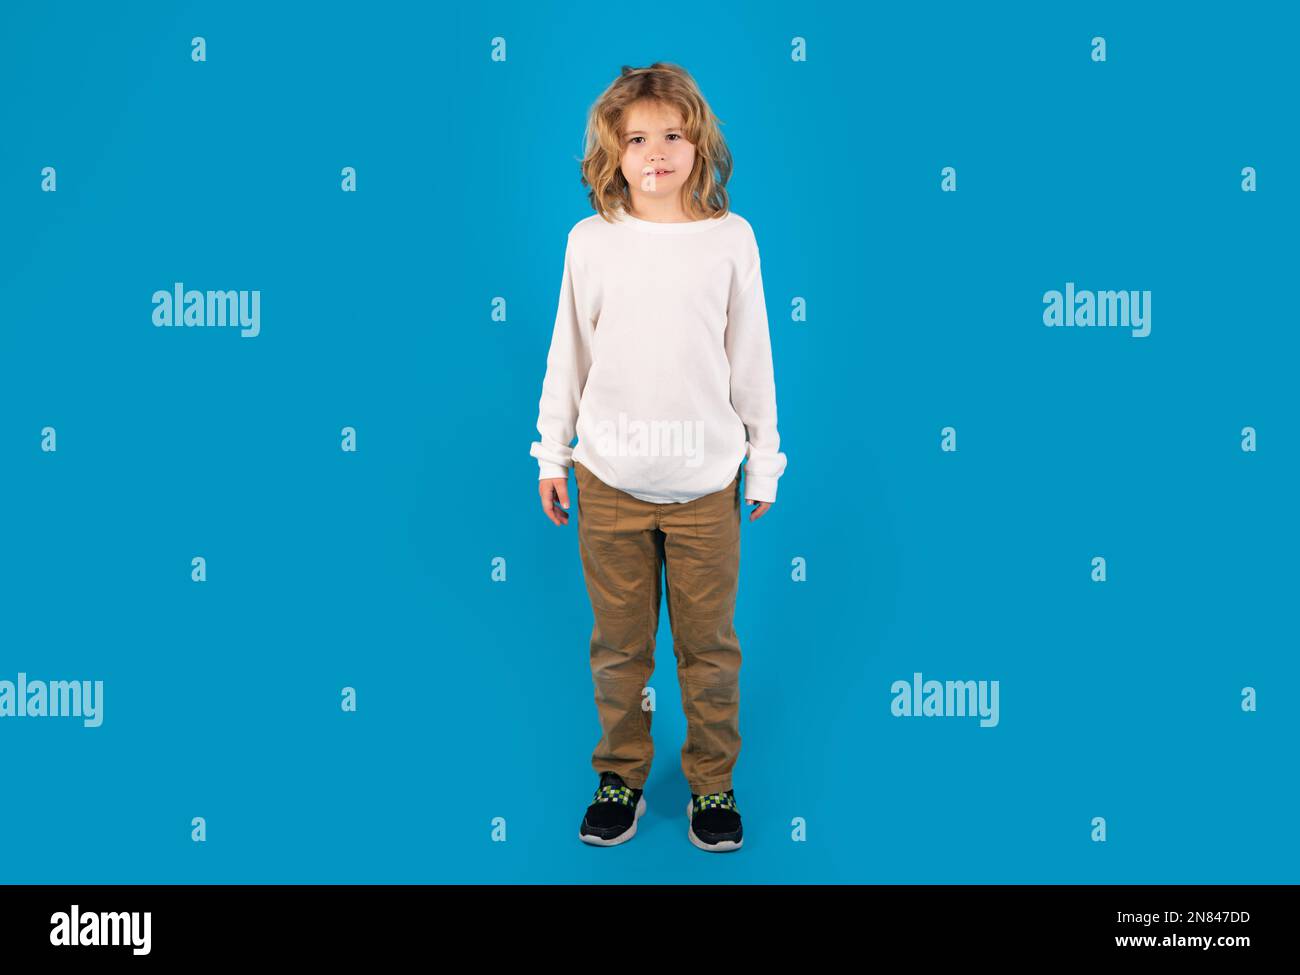 Full size photo of school kid isolated on blue background. Stock Photo